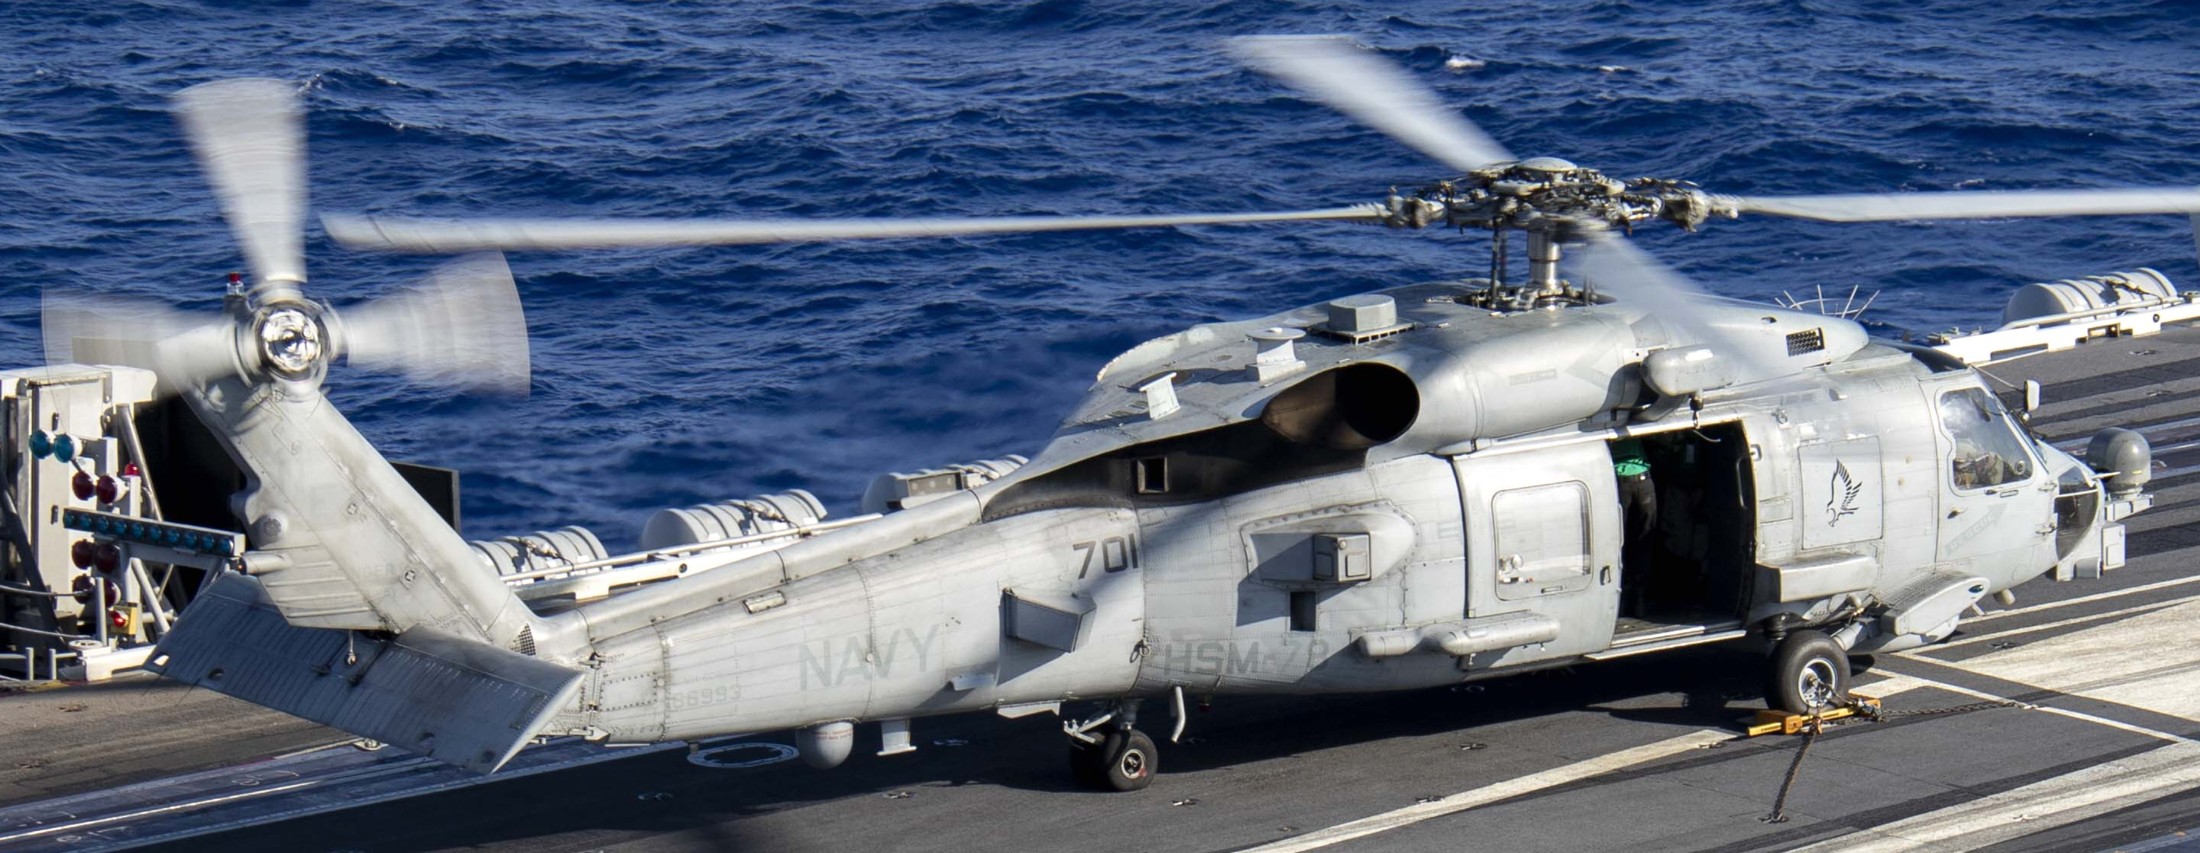 hsm-78 blue hawks helicopter maritime strike squadron mh-60r seahawk cvw-2 uss carl vinson cvn-70 83